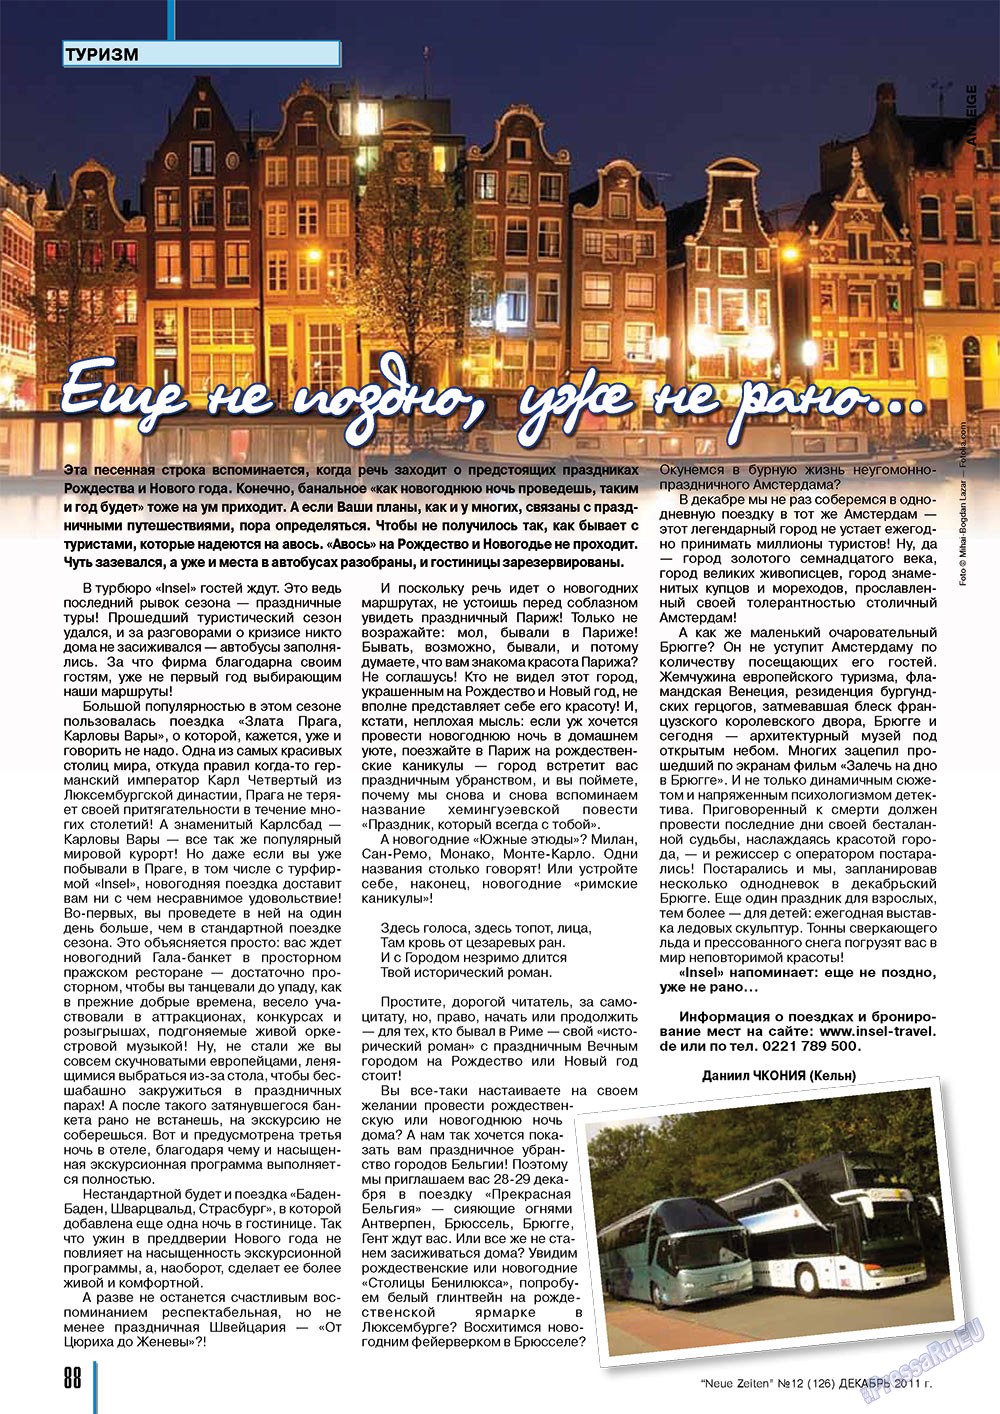 Neue Zeiten (журнал). 2011 год, номер 12, стр. 88